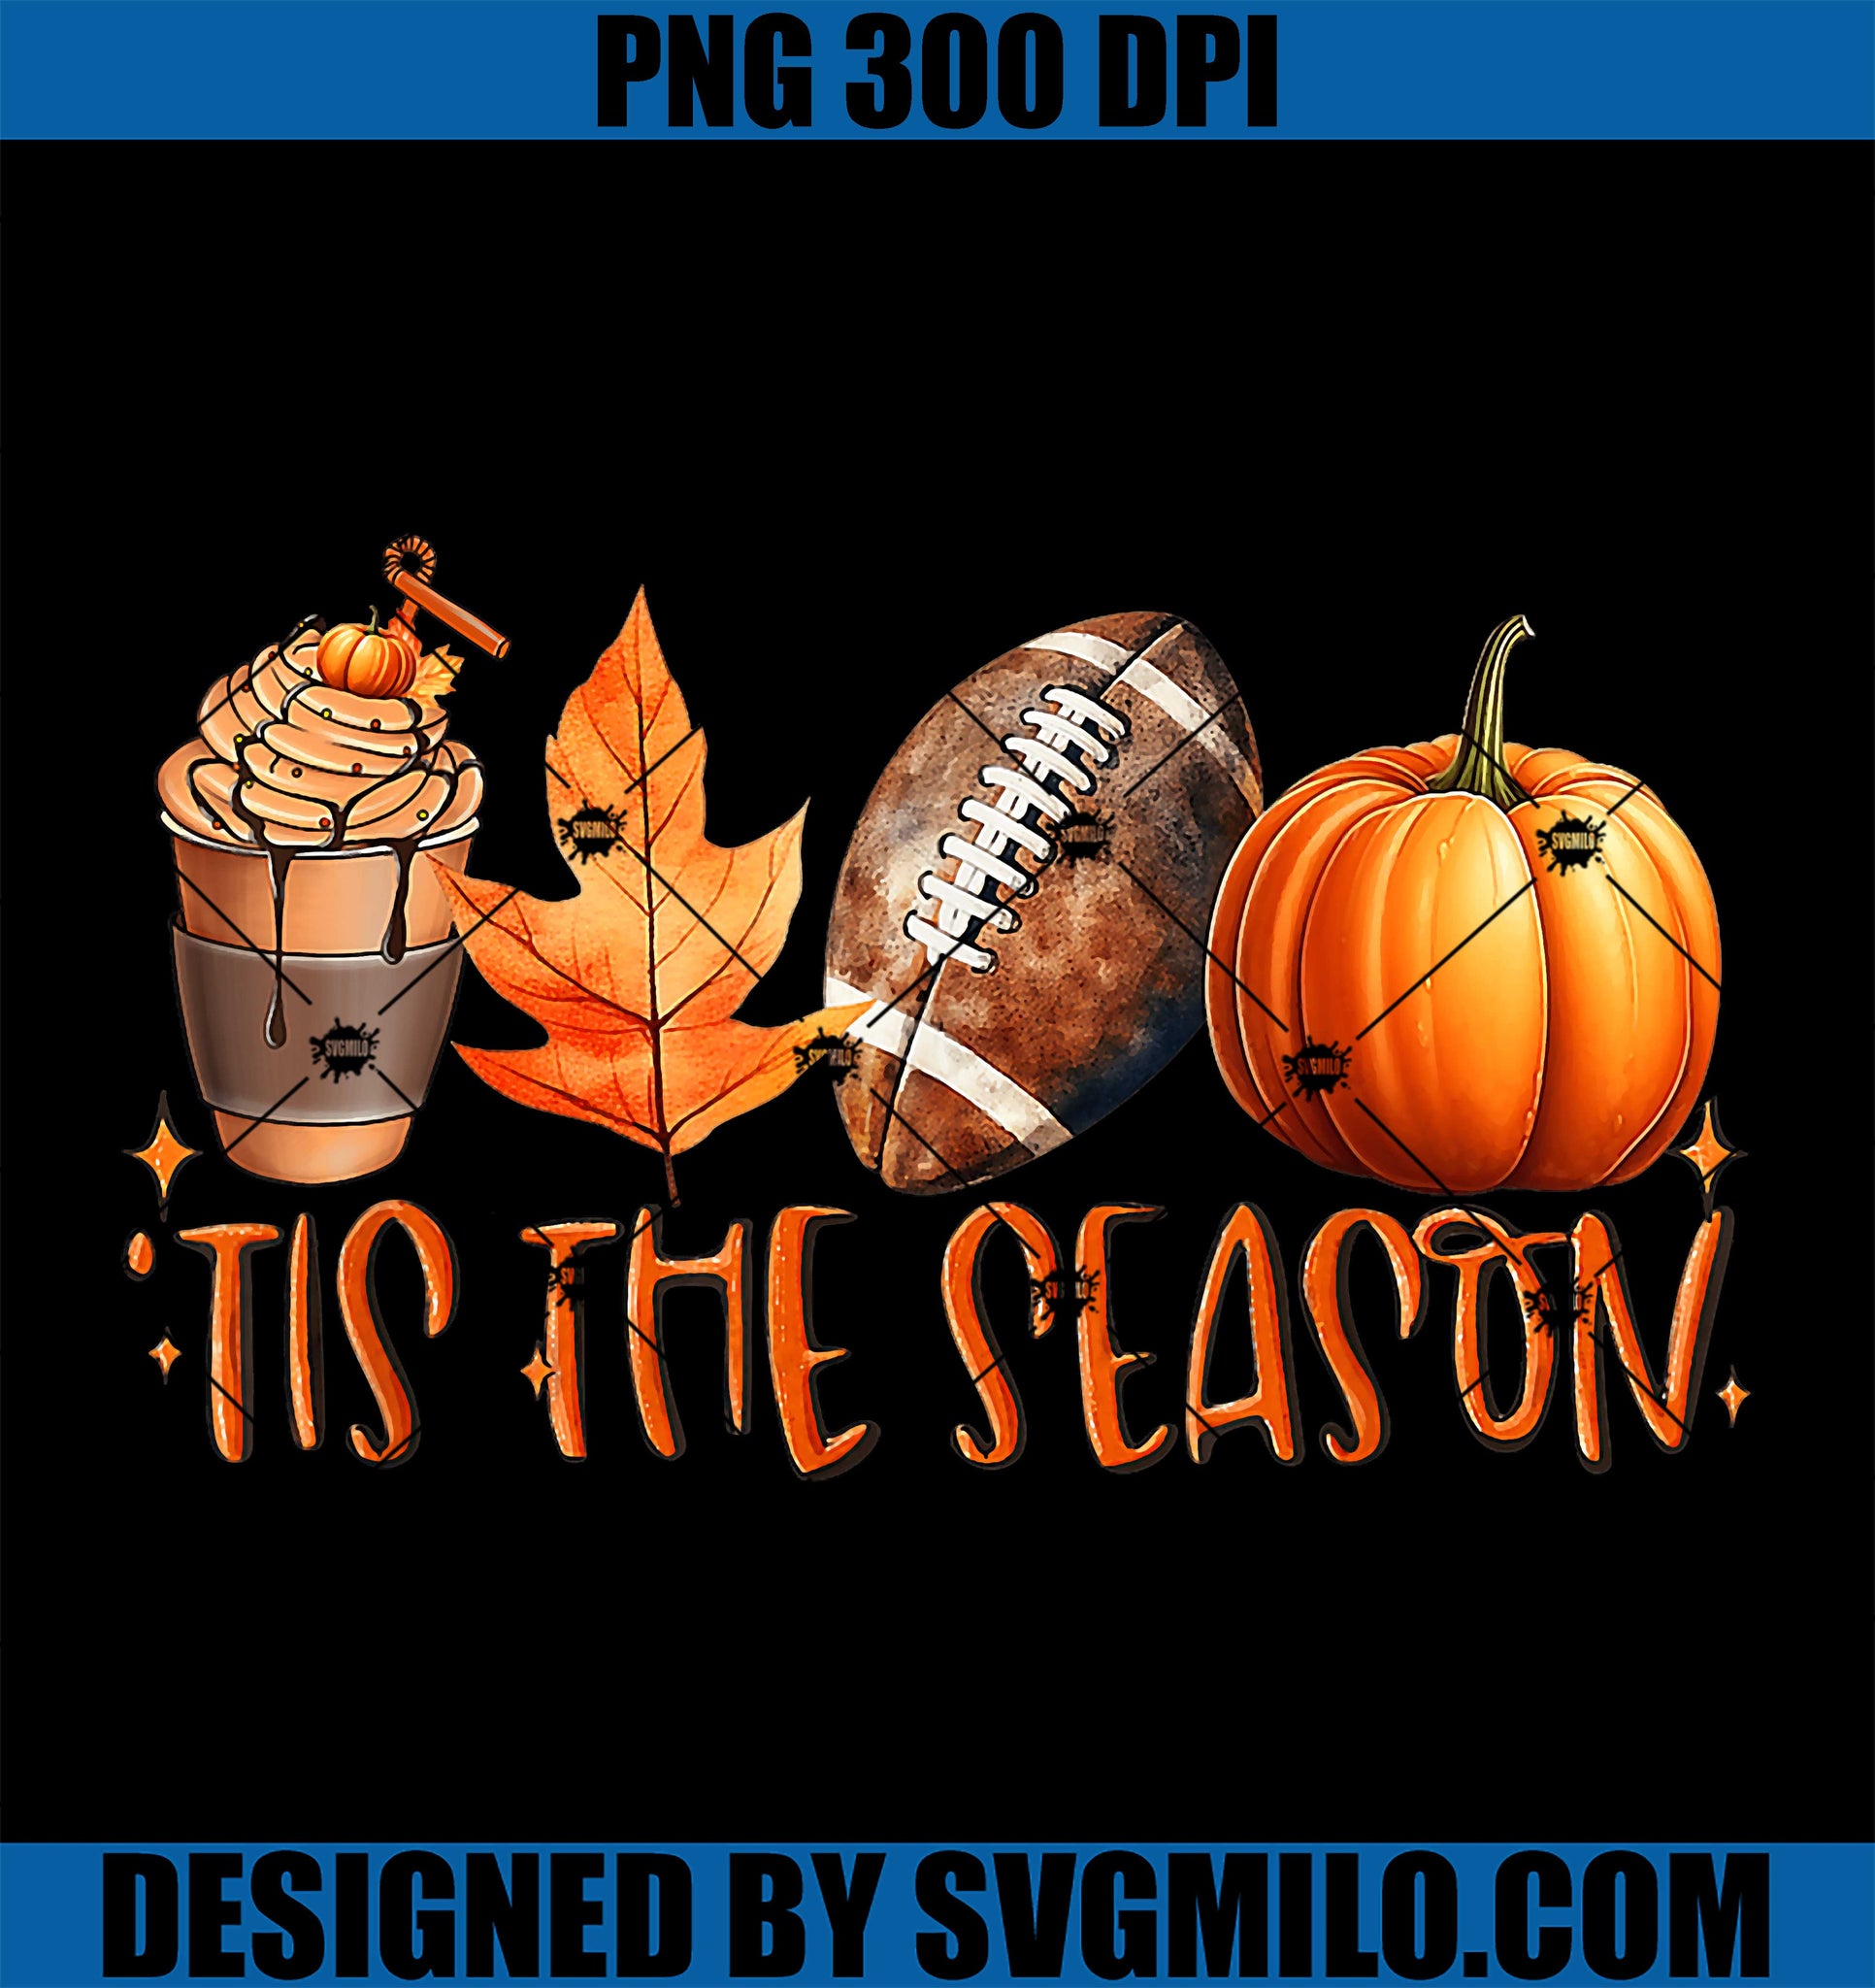 Tis The Season Pumpkin Leaf Latte Fall PNG, Thanksgiving Football PNG